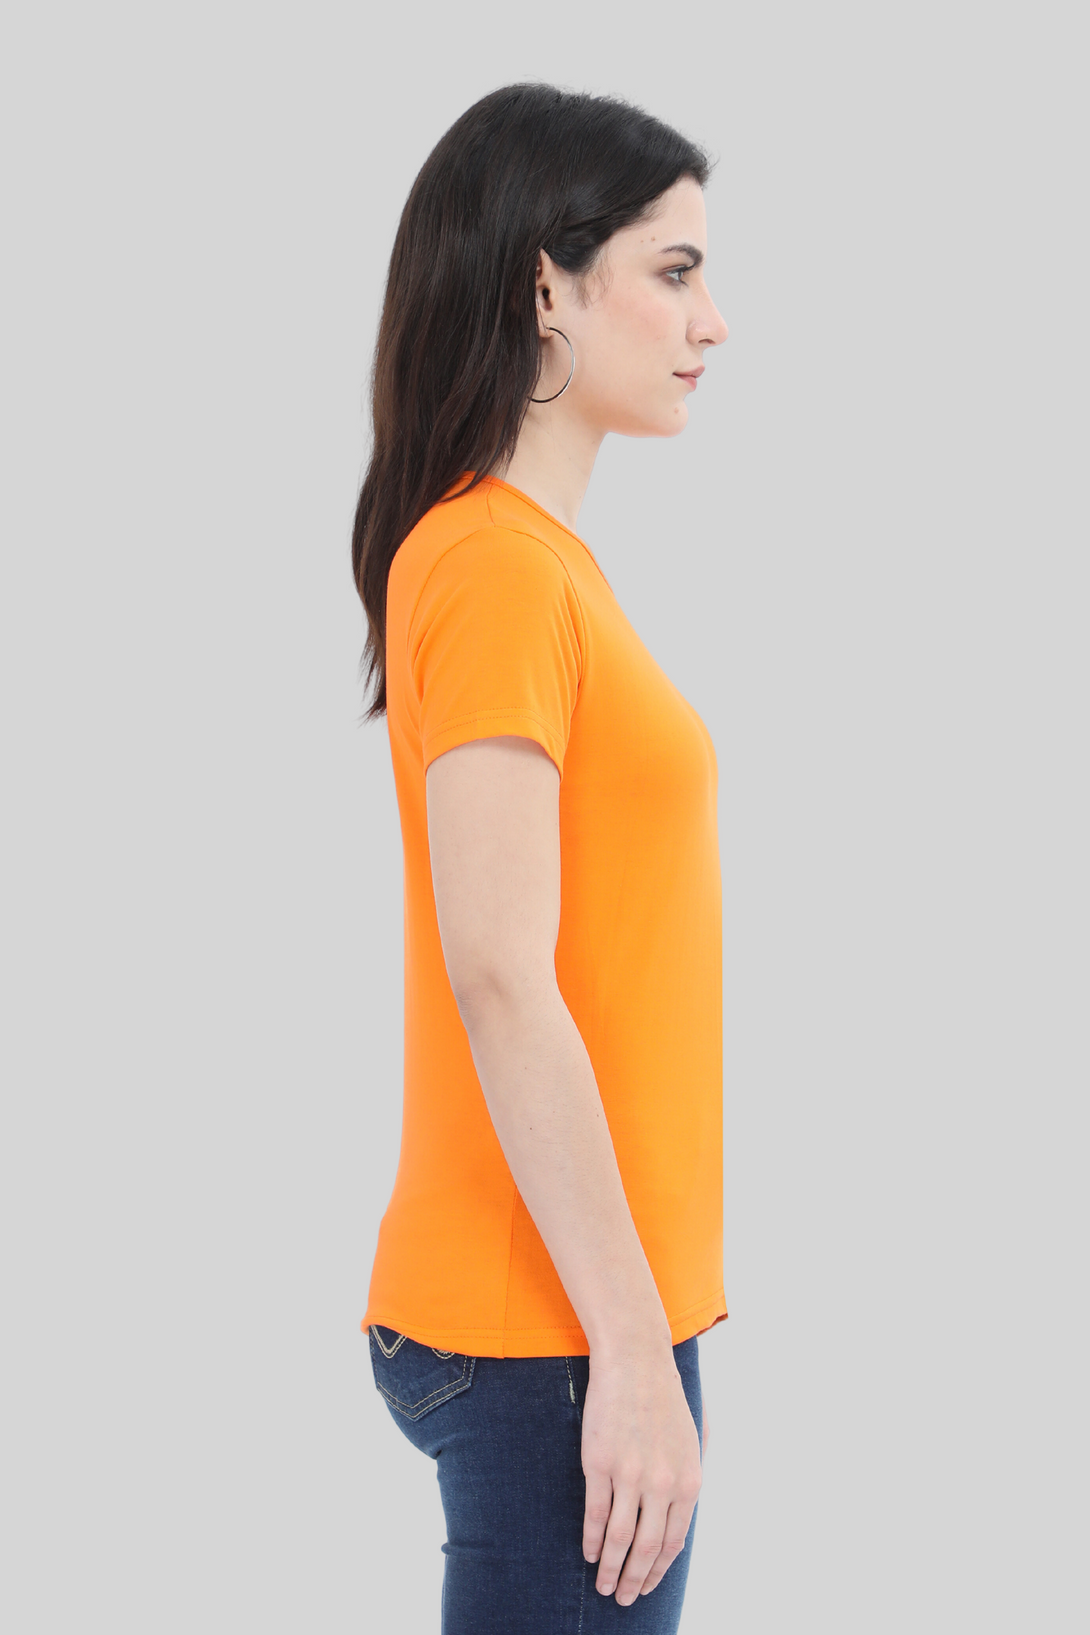 Orange Scoop Neck T-Shirt For Women - WowWaves - 1